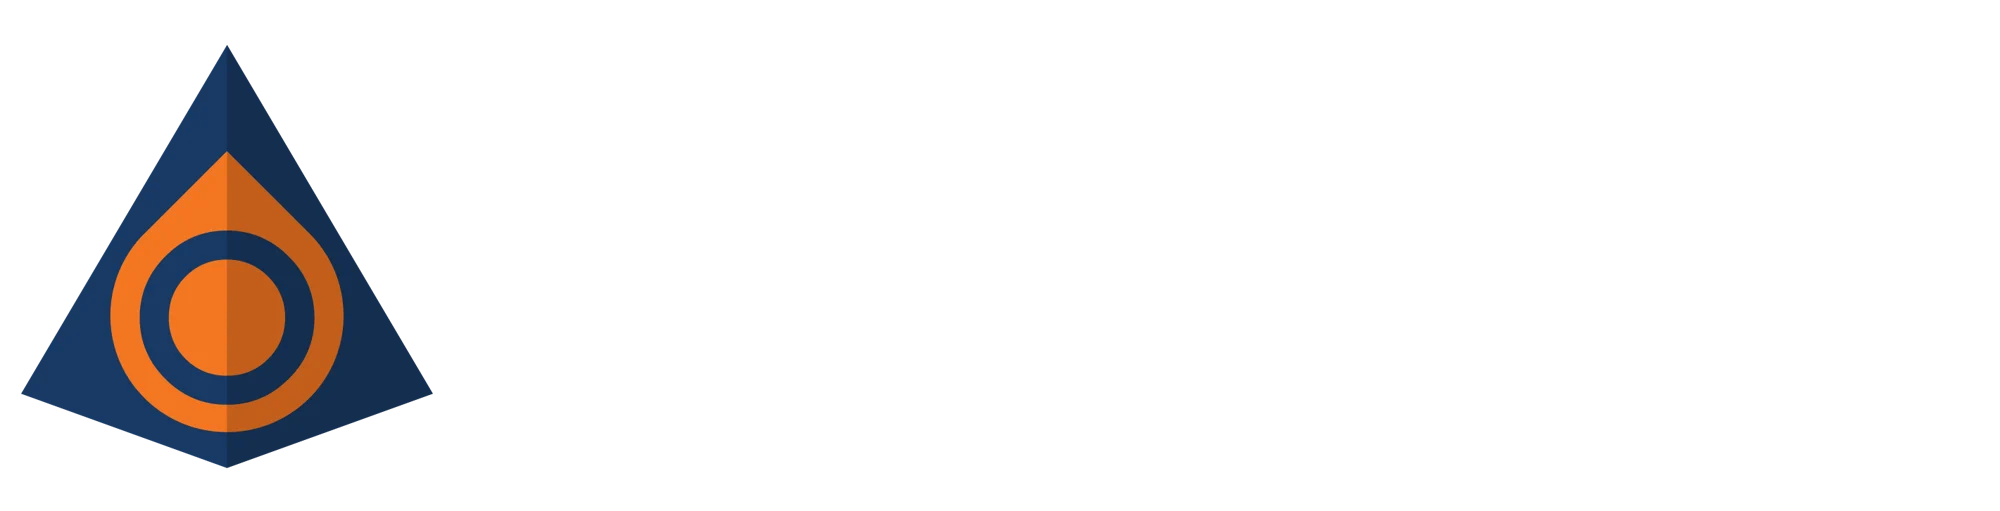 The Crude Oil Edge logo